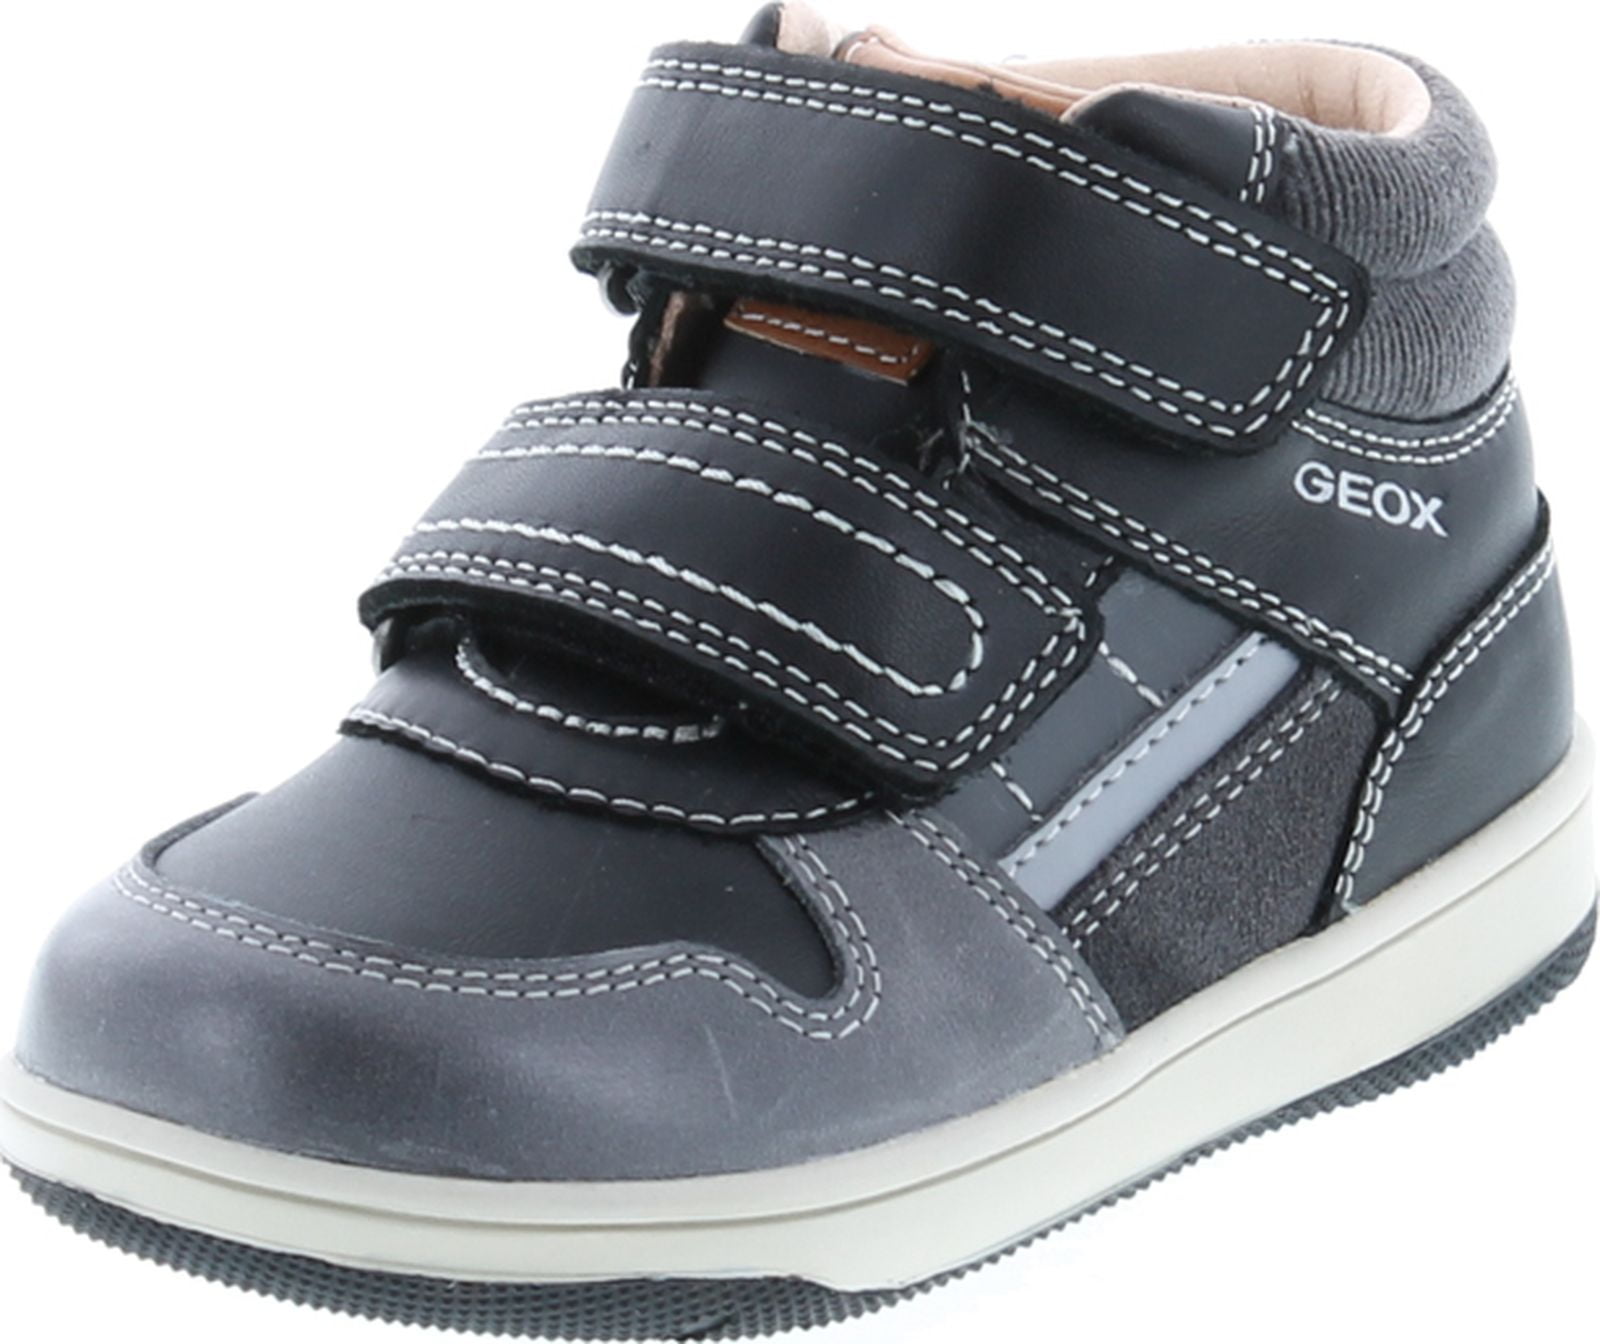 Geox Boys Baby Flick Fashion Sneaker Shoes, Grey, 22 Walmart.com